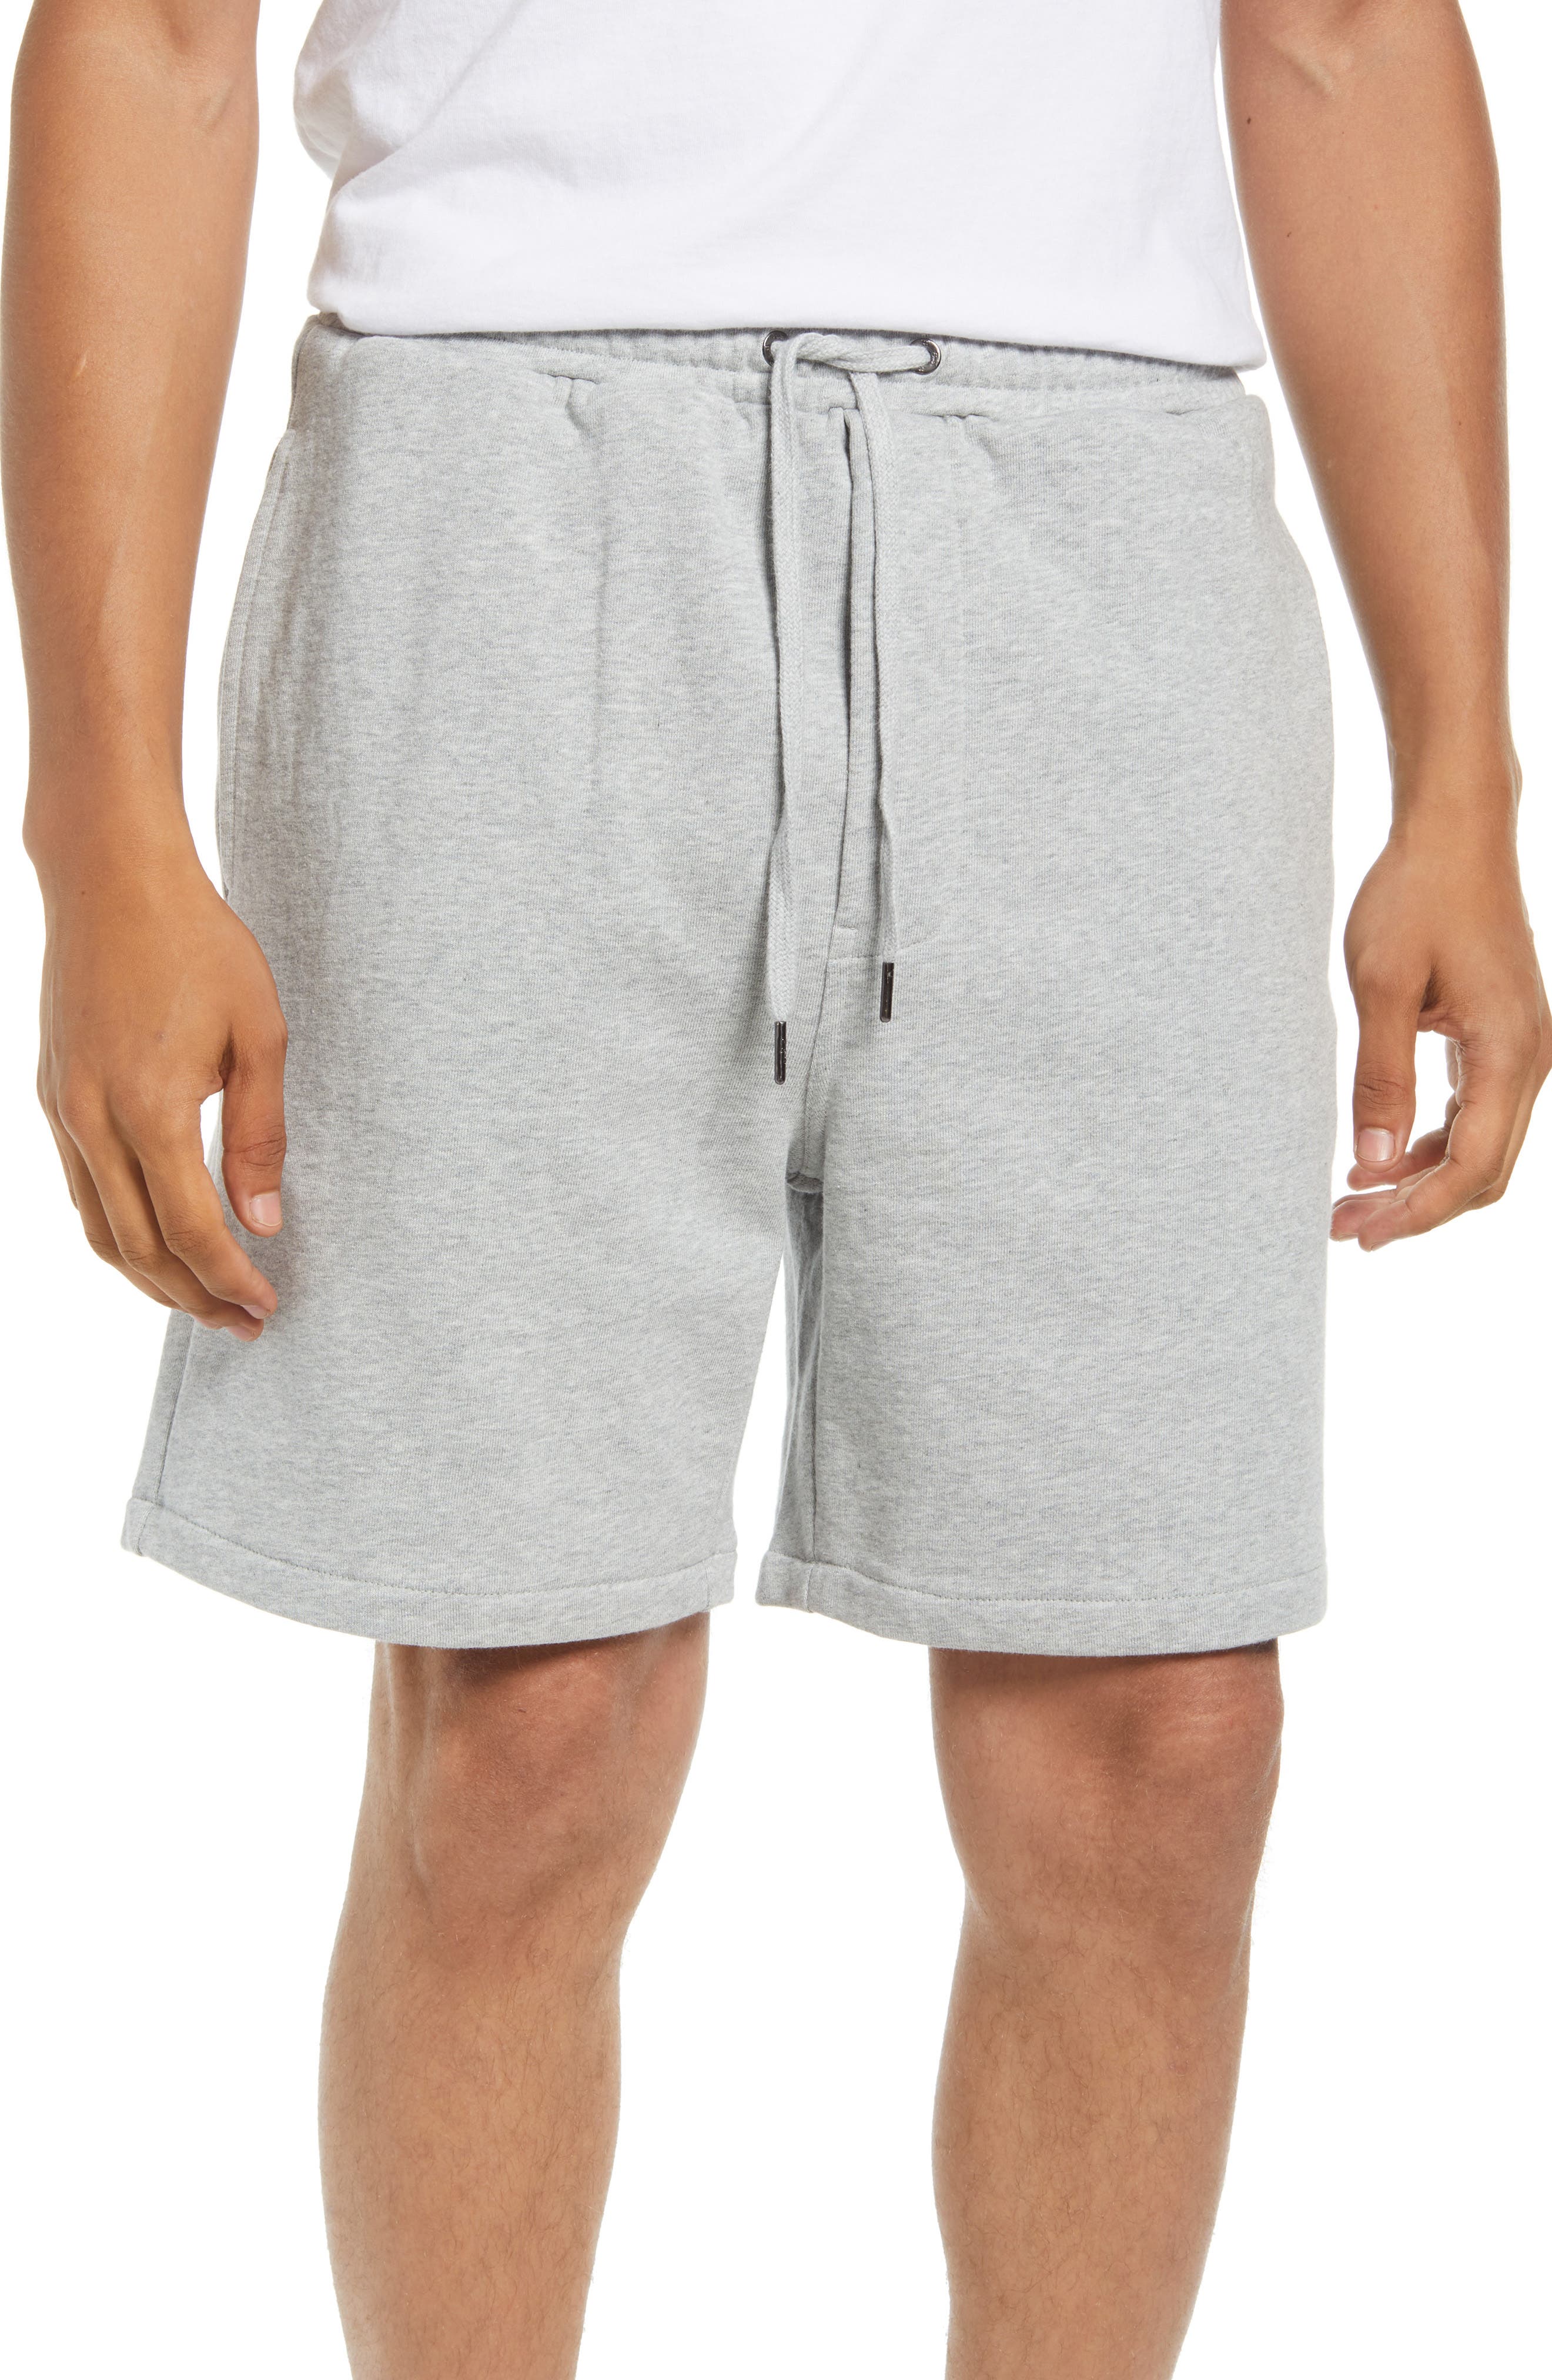 Ksubi Men's Lofi Shorts in Light Grey at Nordstrom, Size Medium